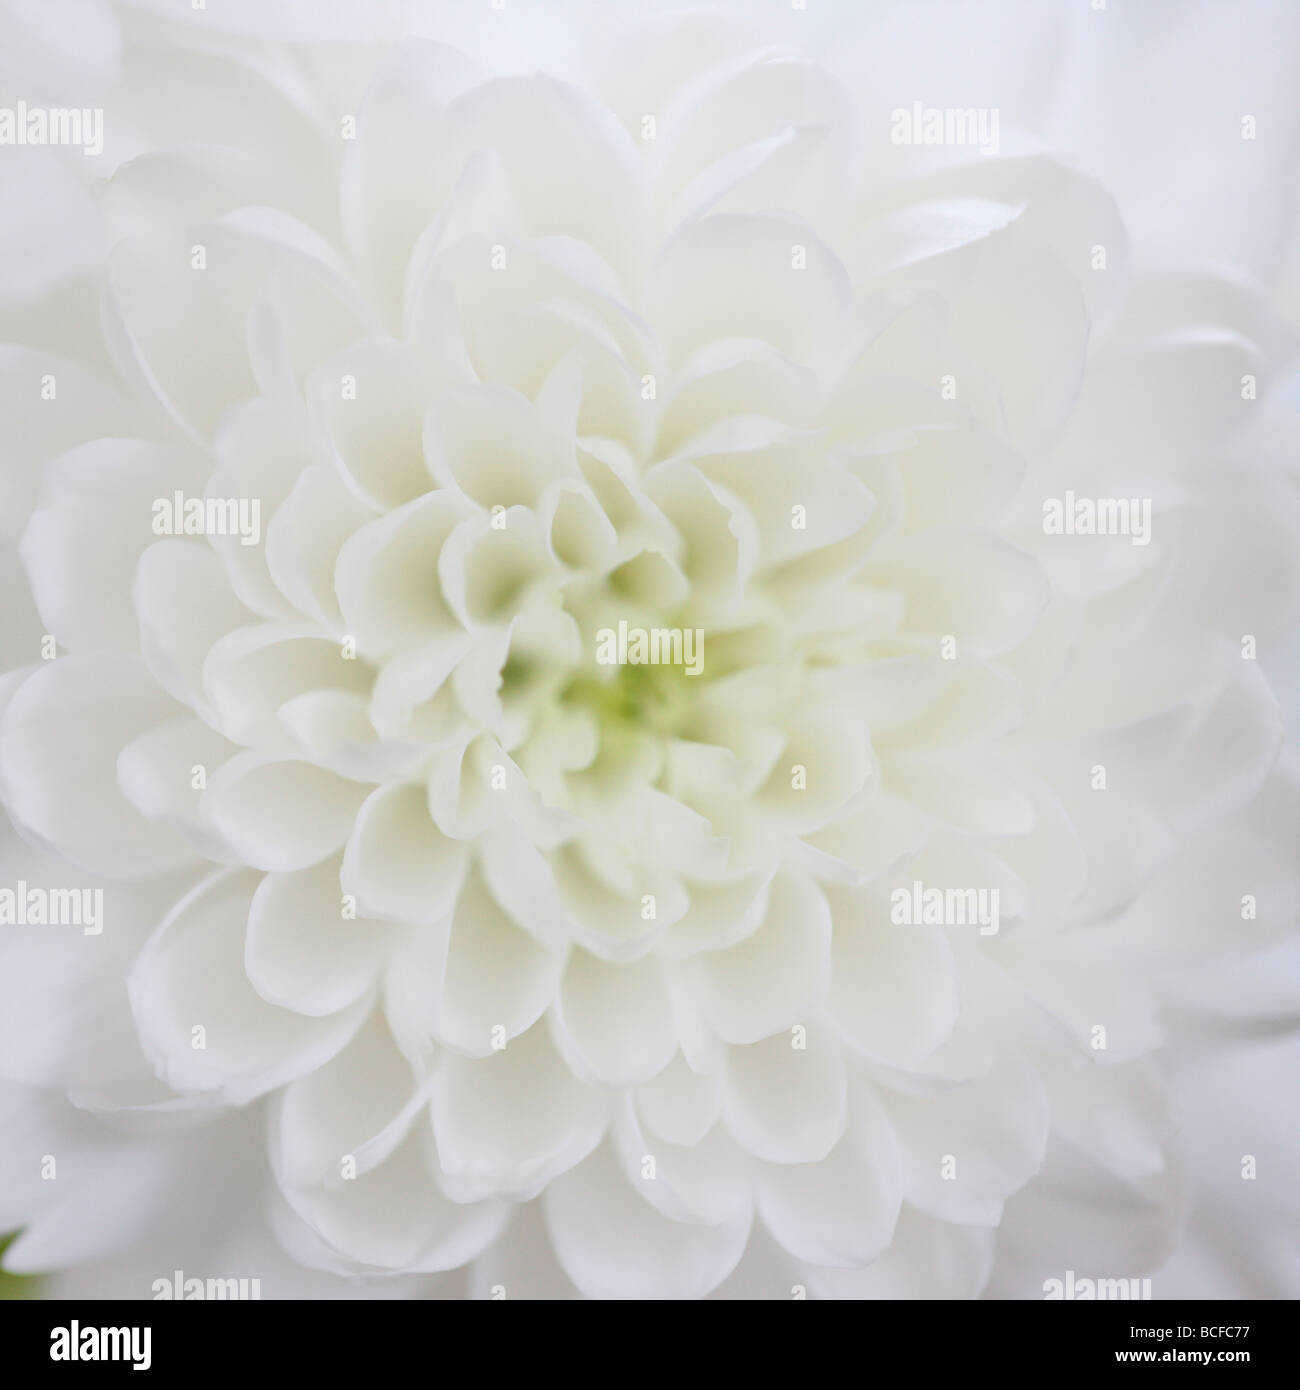 full frame close up of the white petalled chrysanthemum fine art photography Jane Ann Butler Photography JABP429 Stock Photo